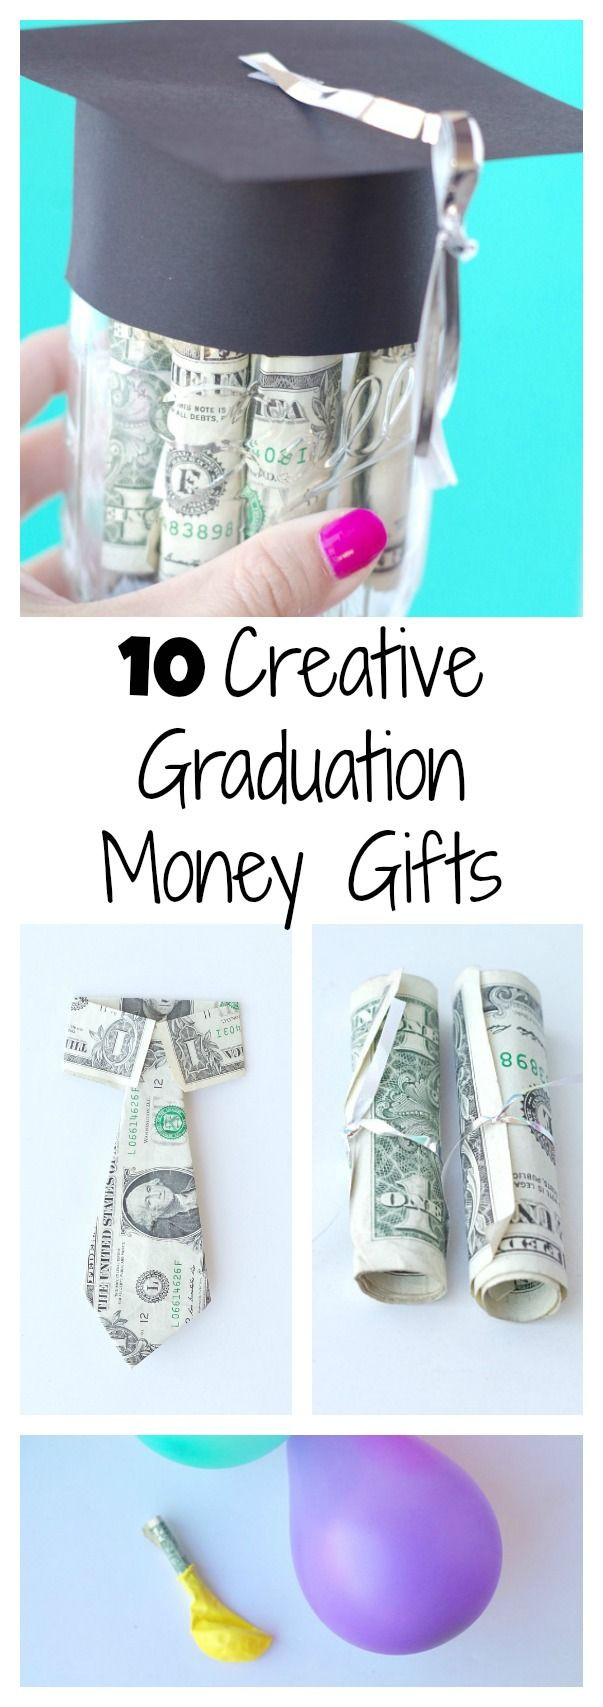 Money Gift Ideas For Graduation
 10 Creative Graduation Money Gifts